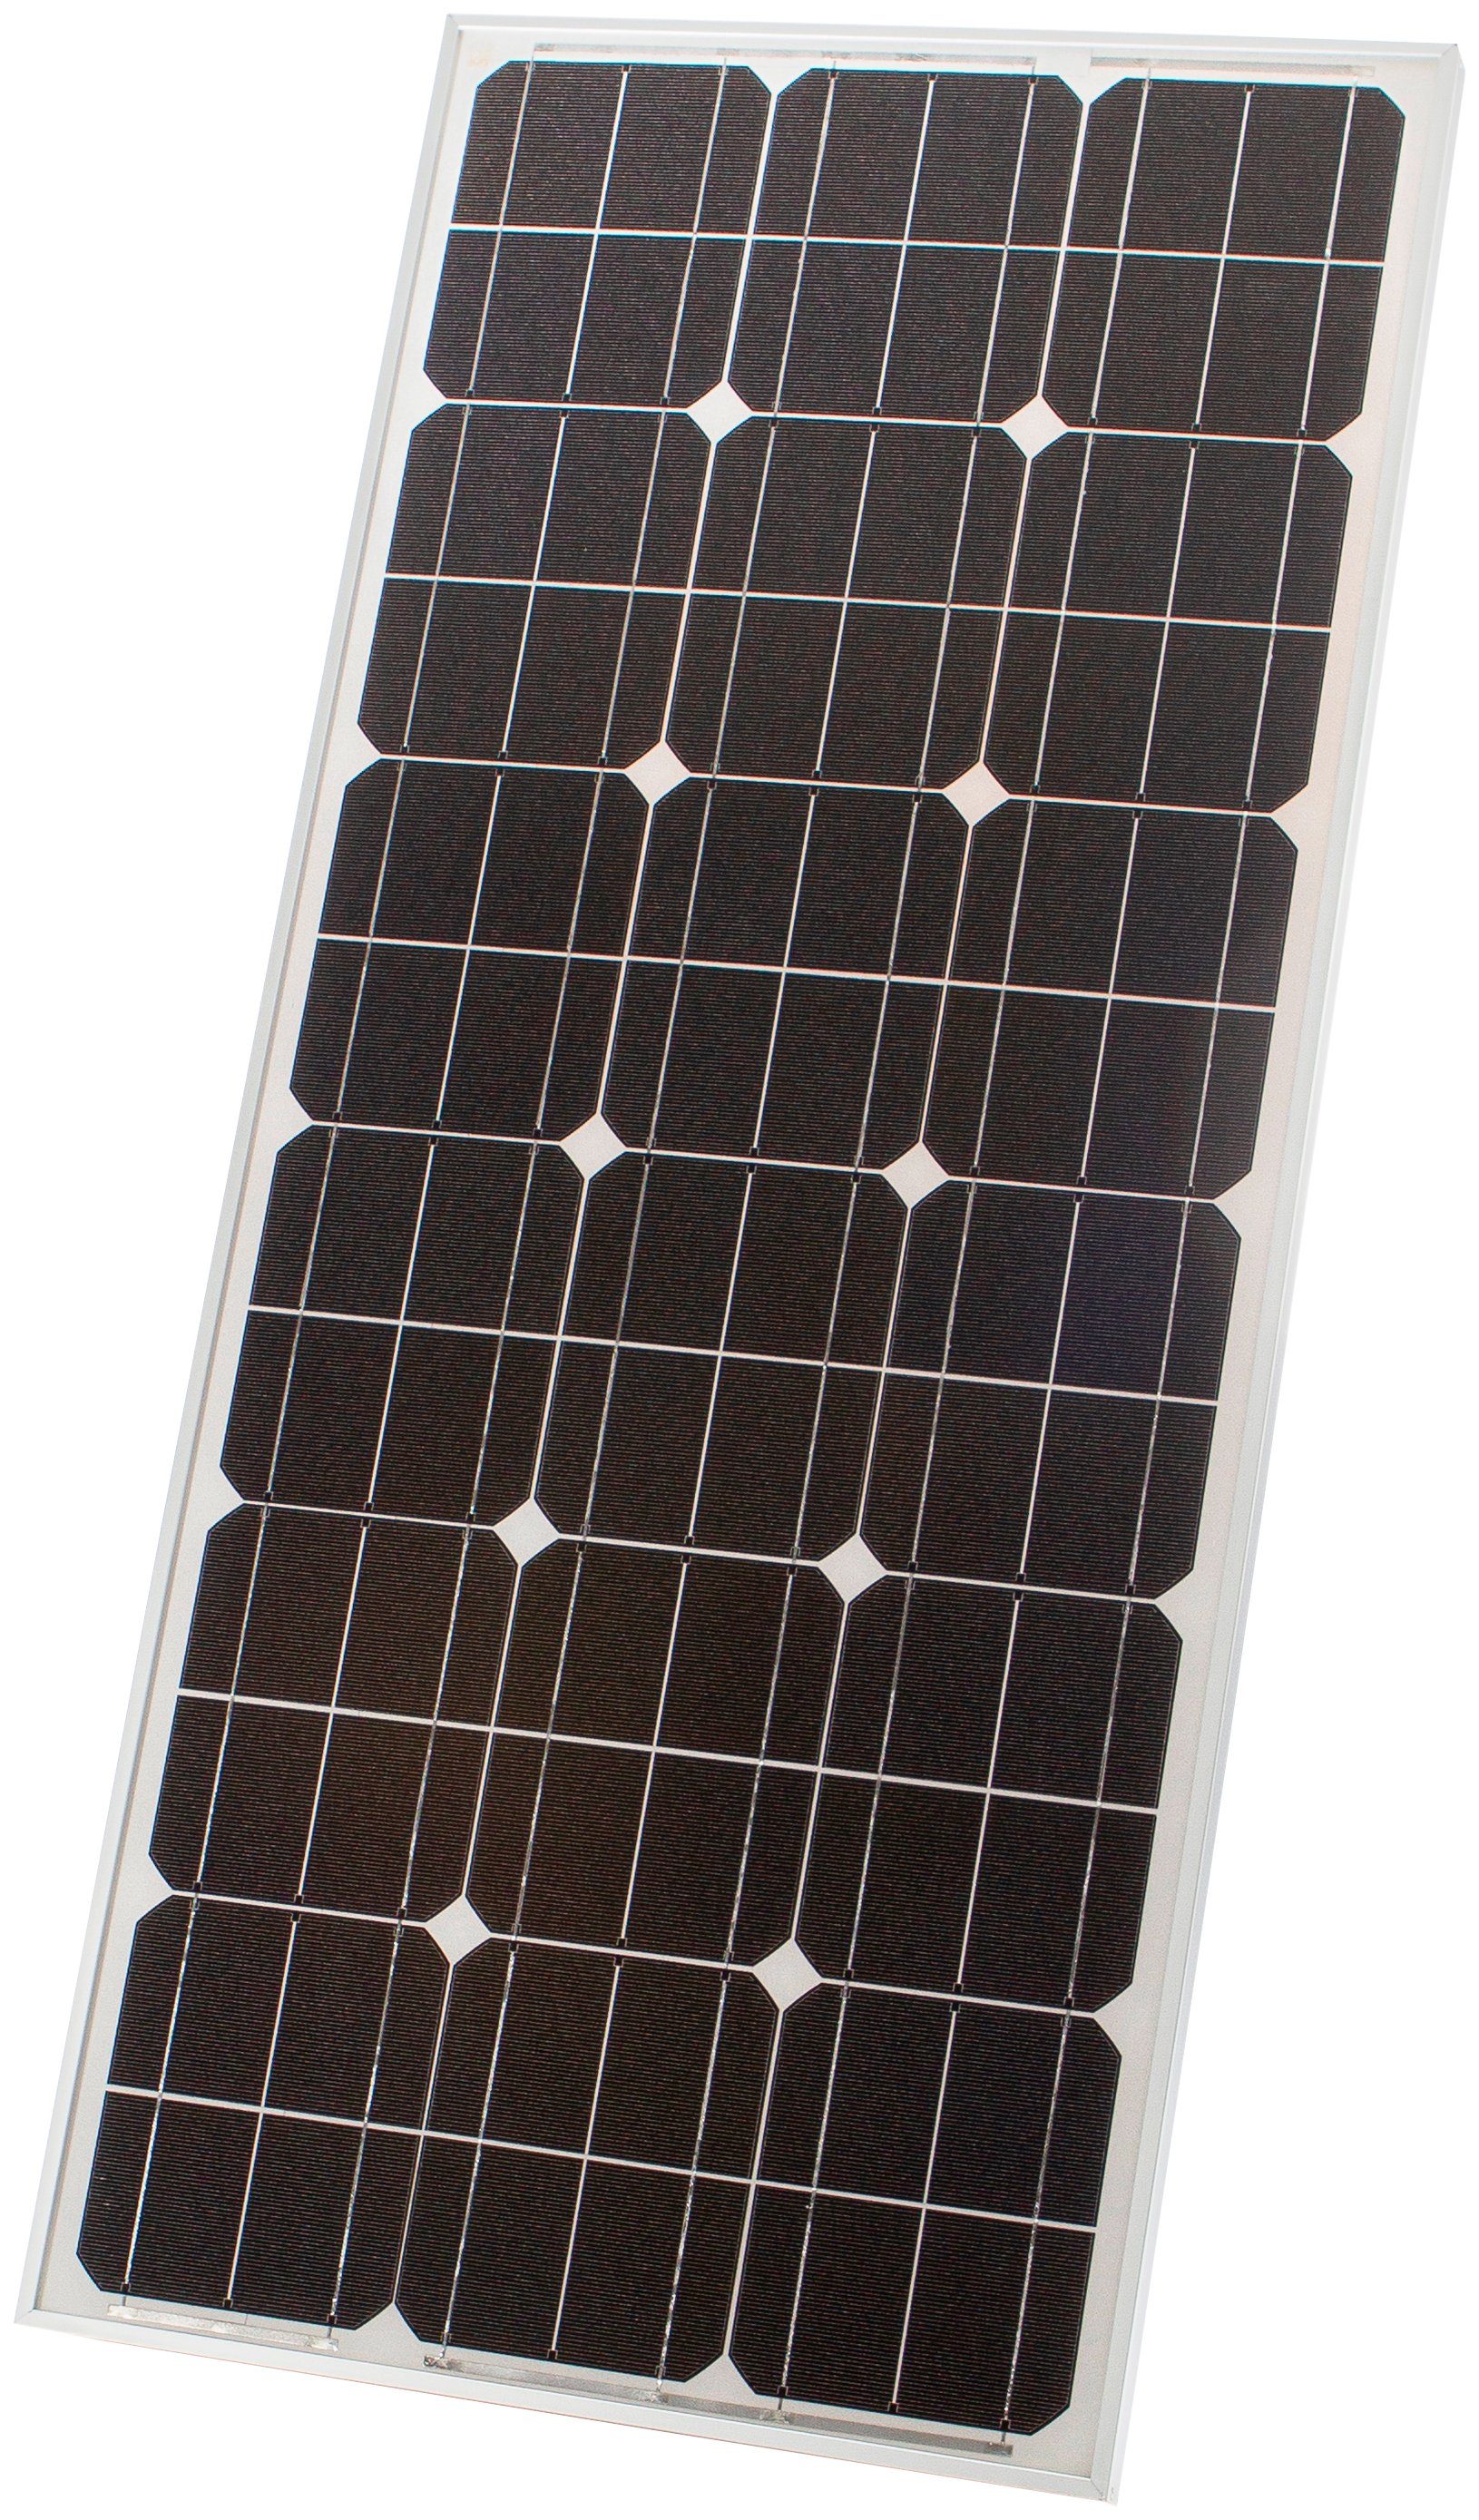 Verkauf zum niedrigsten Preis! Sunset Solarmodul AS W, 12 75, 75 Watt, Monokristallin 72 V